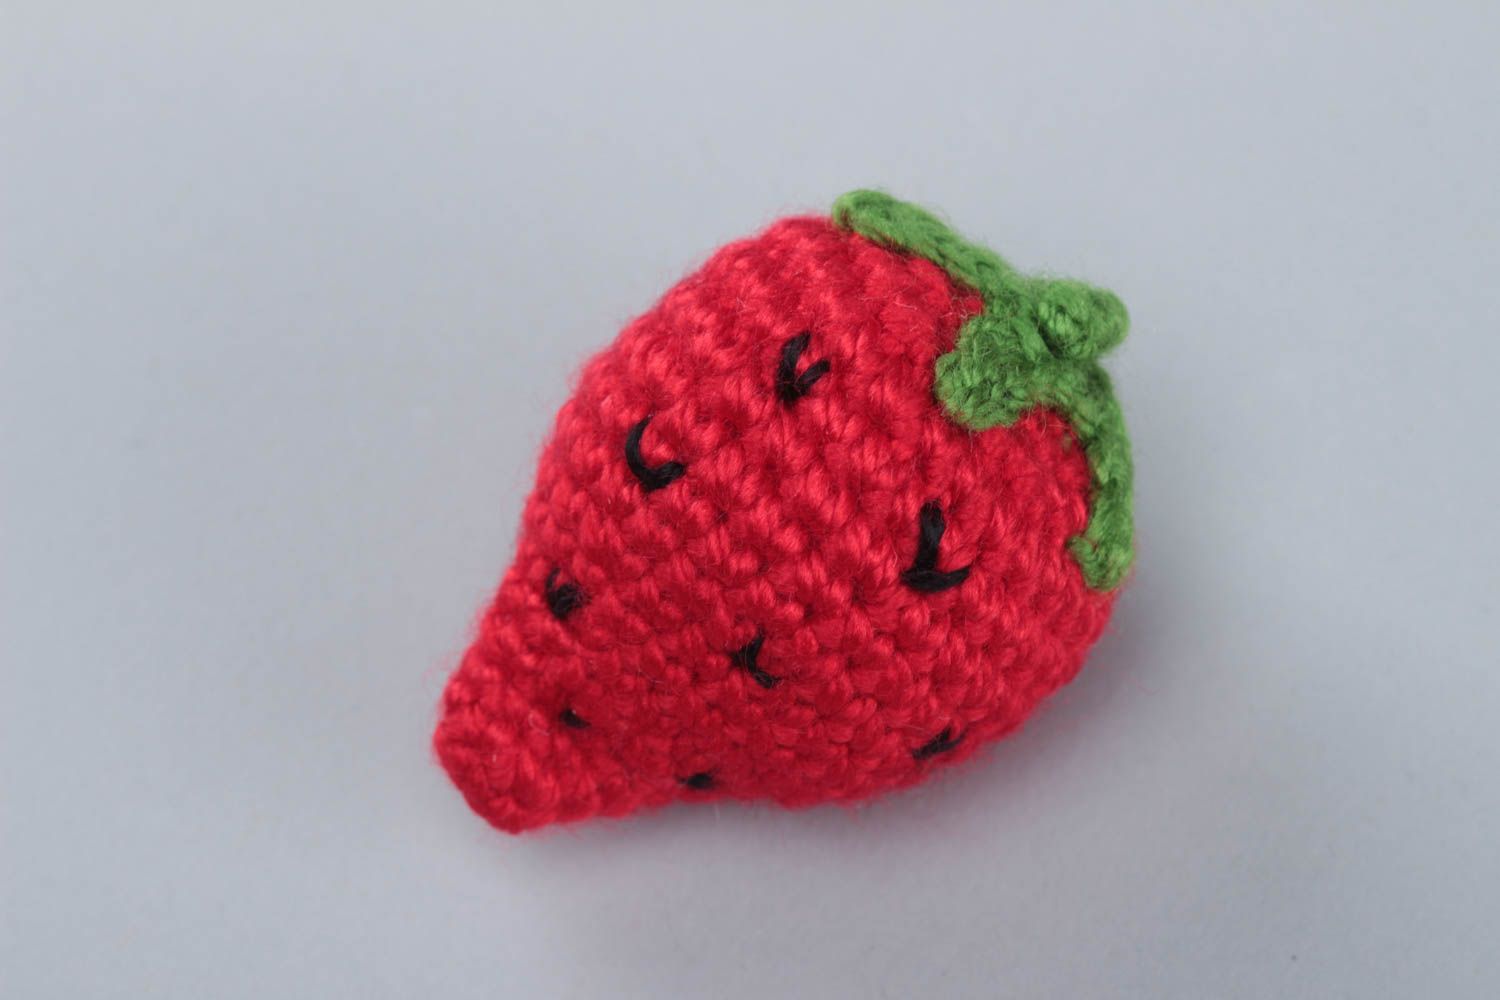 Handmade small designer crochet soft toy strawberry for kids and interior decor photo 2